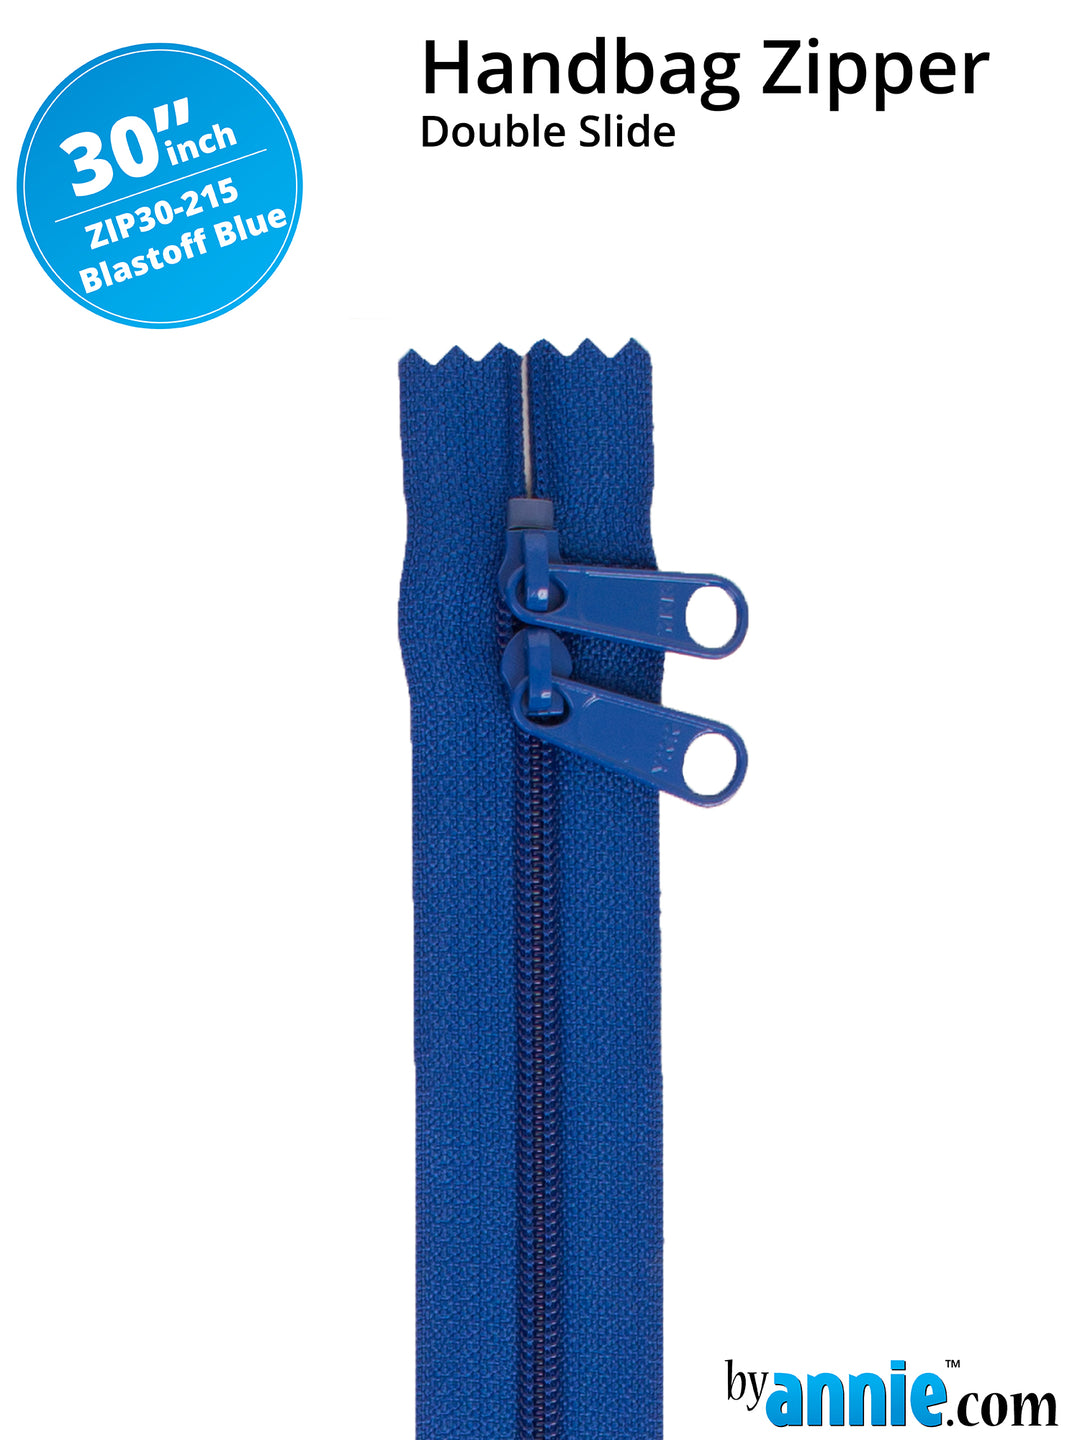 30" Handbag Zipper - Double Slide - Blastoff Blue